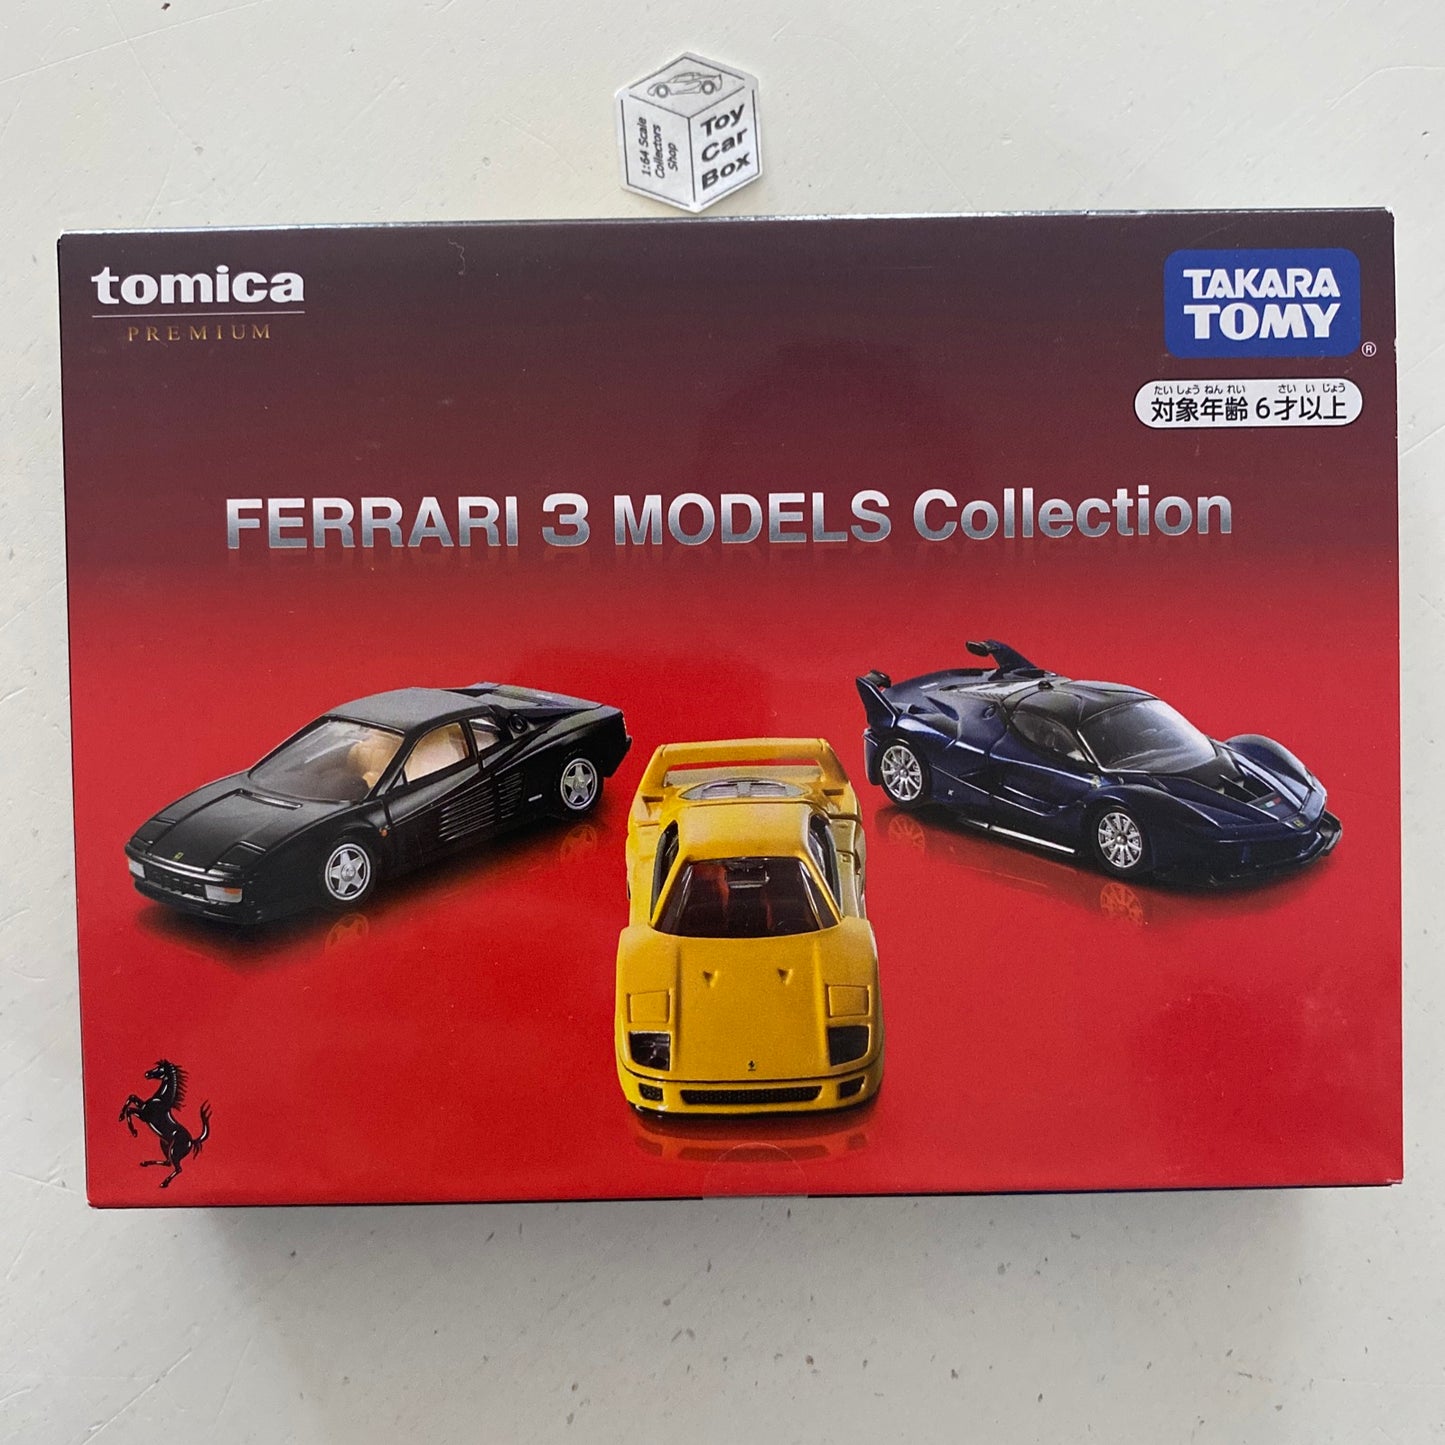 TOMICA Premium Ferrari Collection (Testarossa, F40 & FXX K) CA00